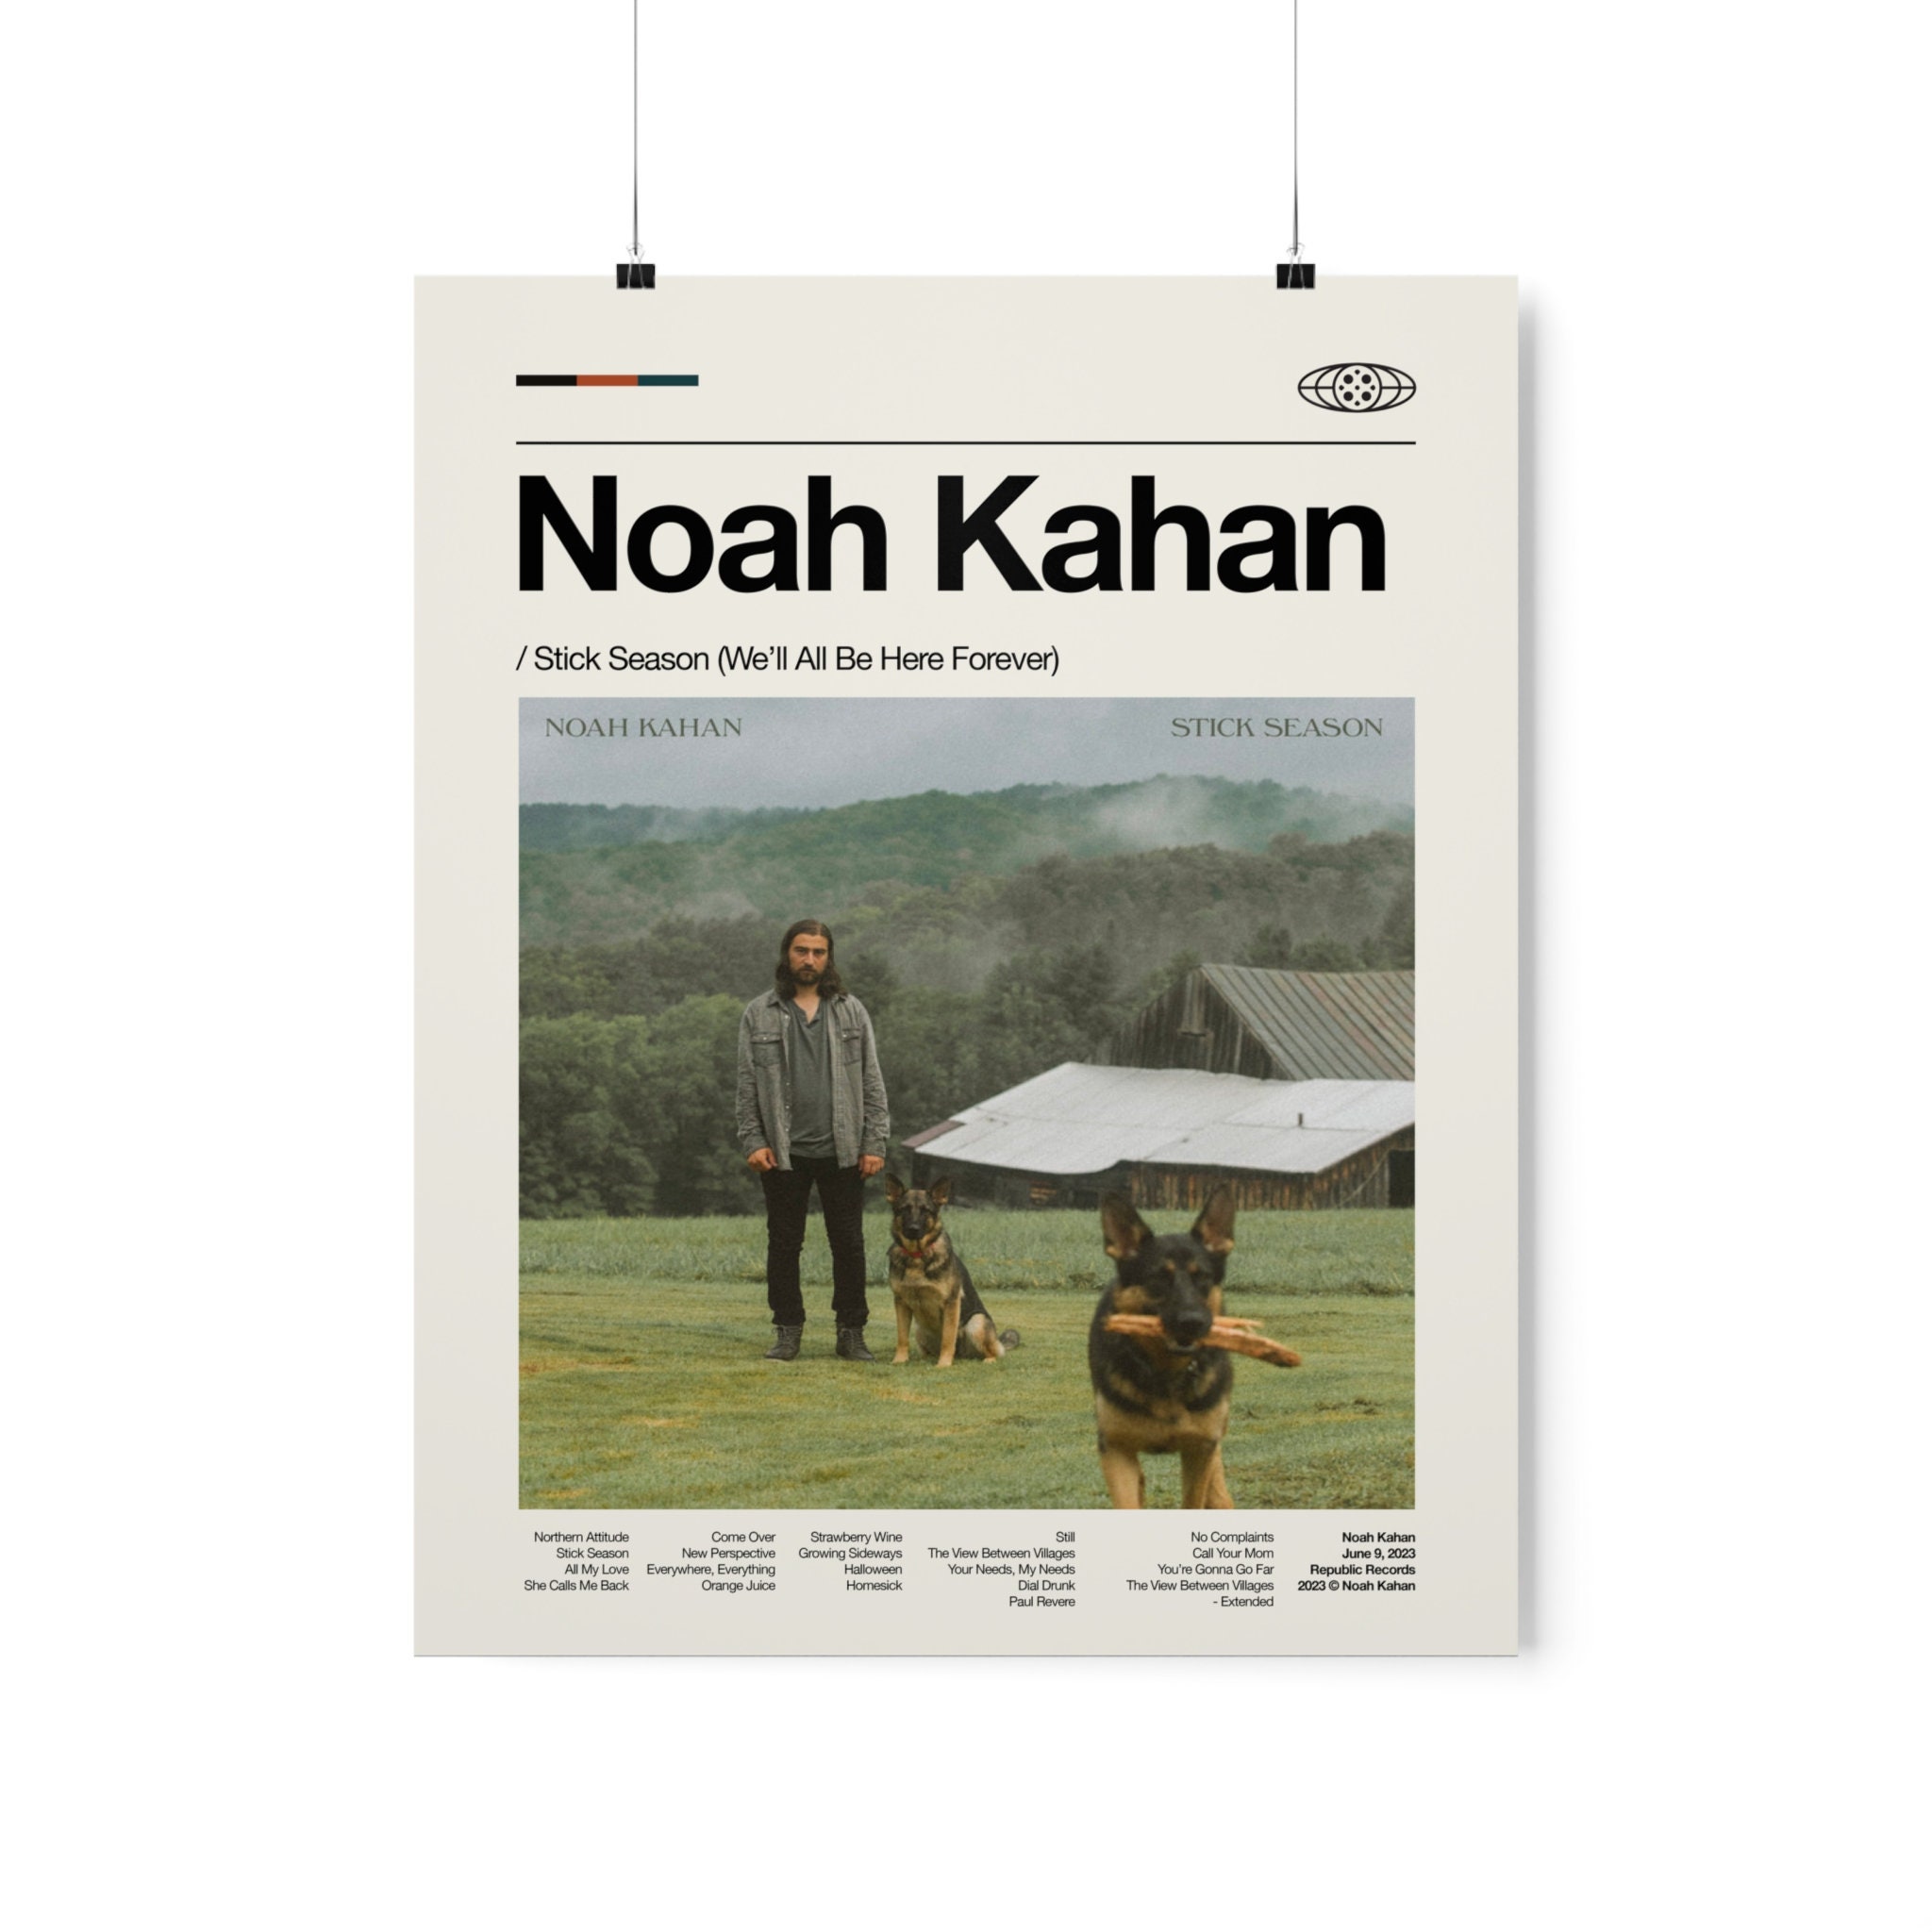 Noah Kahan - Stick Season (We'll All Be Here Forever) Lyrics and